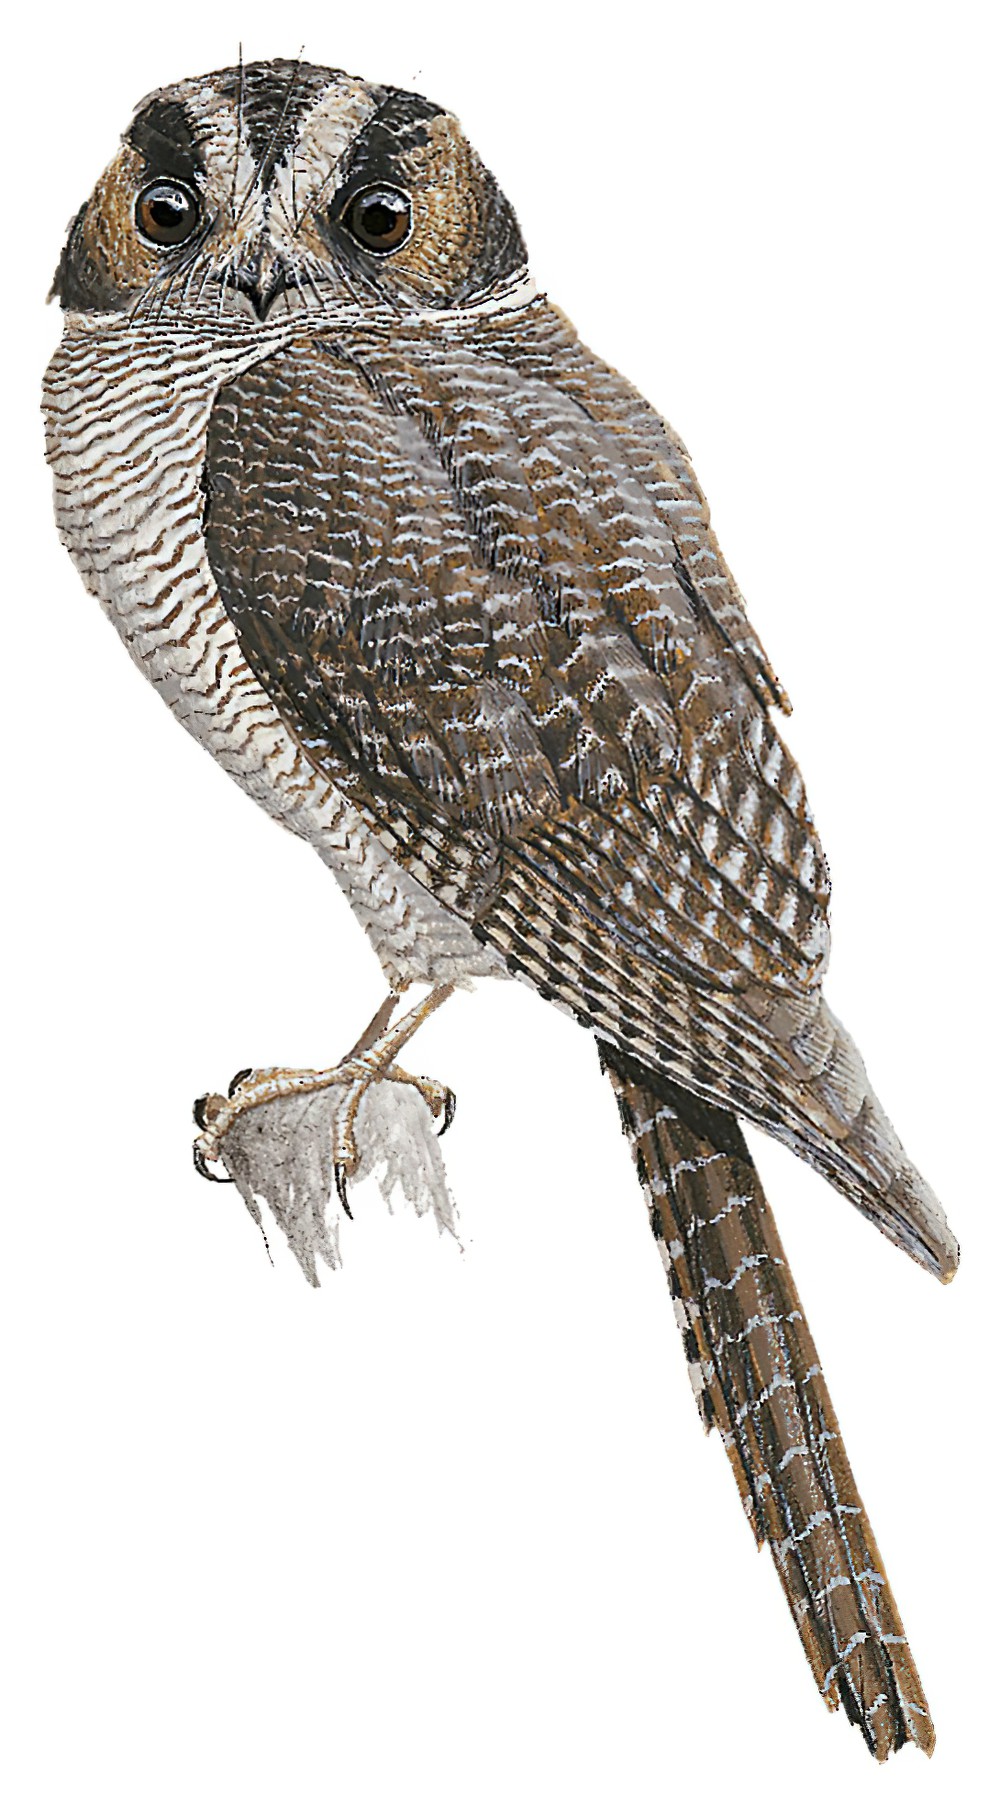 Barred Owlet-nightjar / Aegotheles bennettii